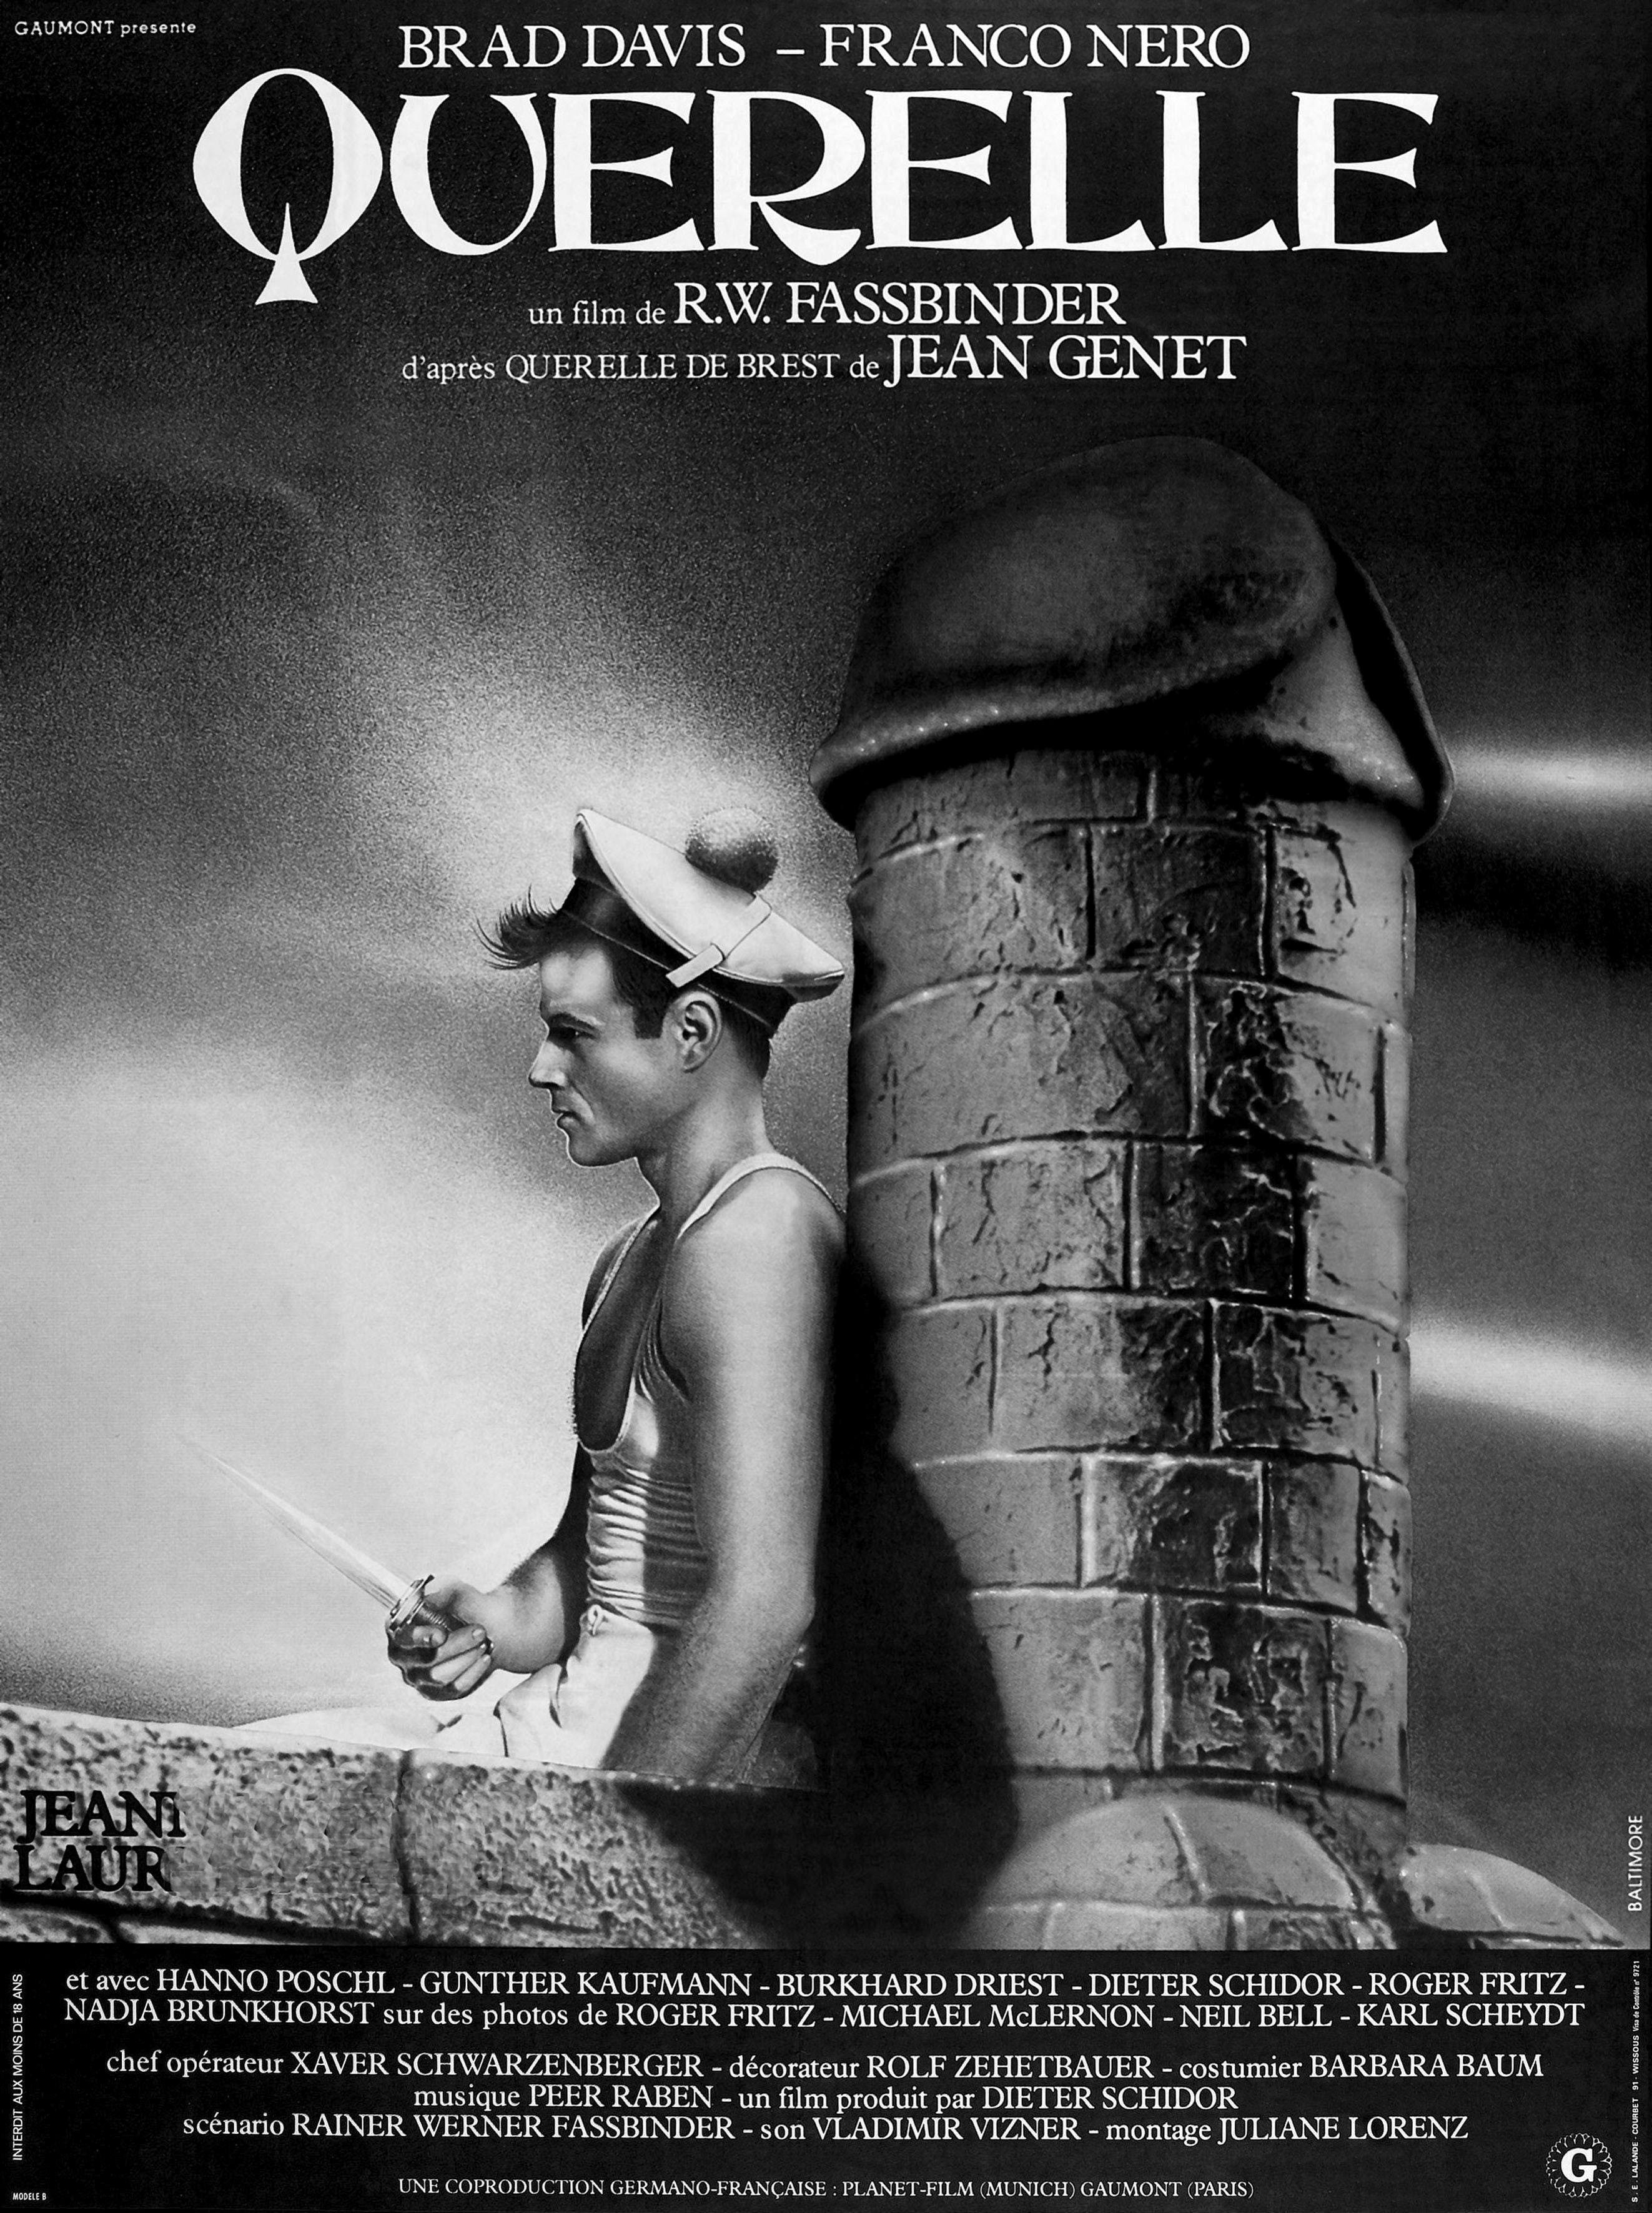 querelle year 1982 director rainer werner cinema / germany france man sailor chimney penis fassbinder brad davis movie poster (fr) based upon the novel of jean genet person human advertisement